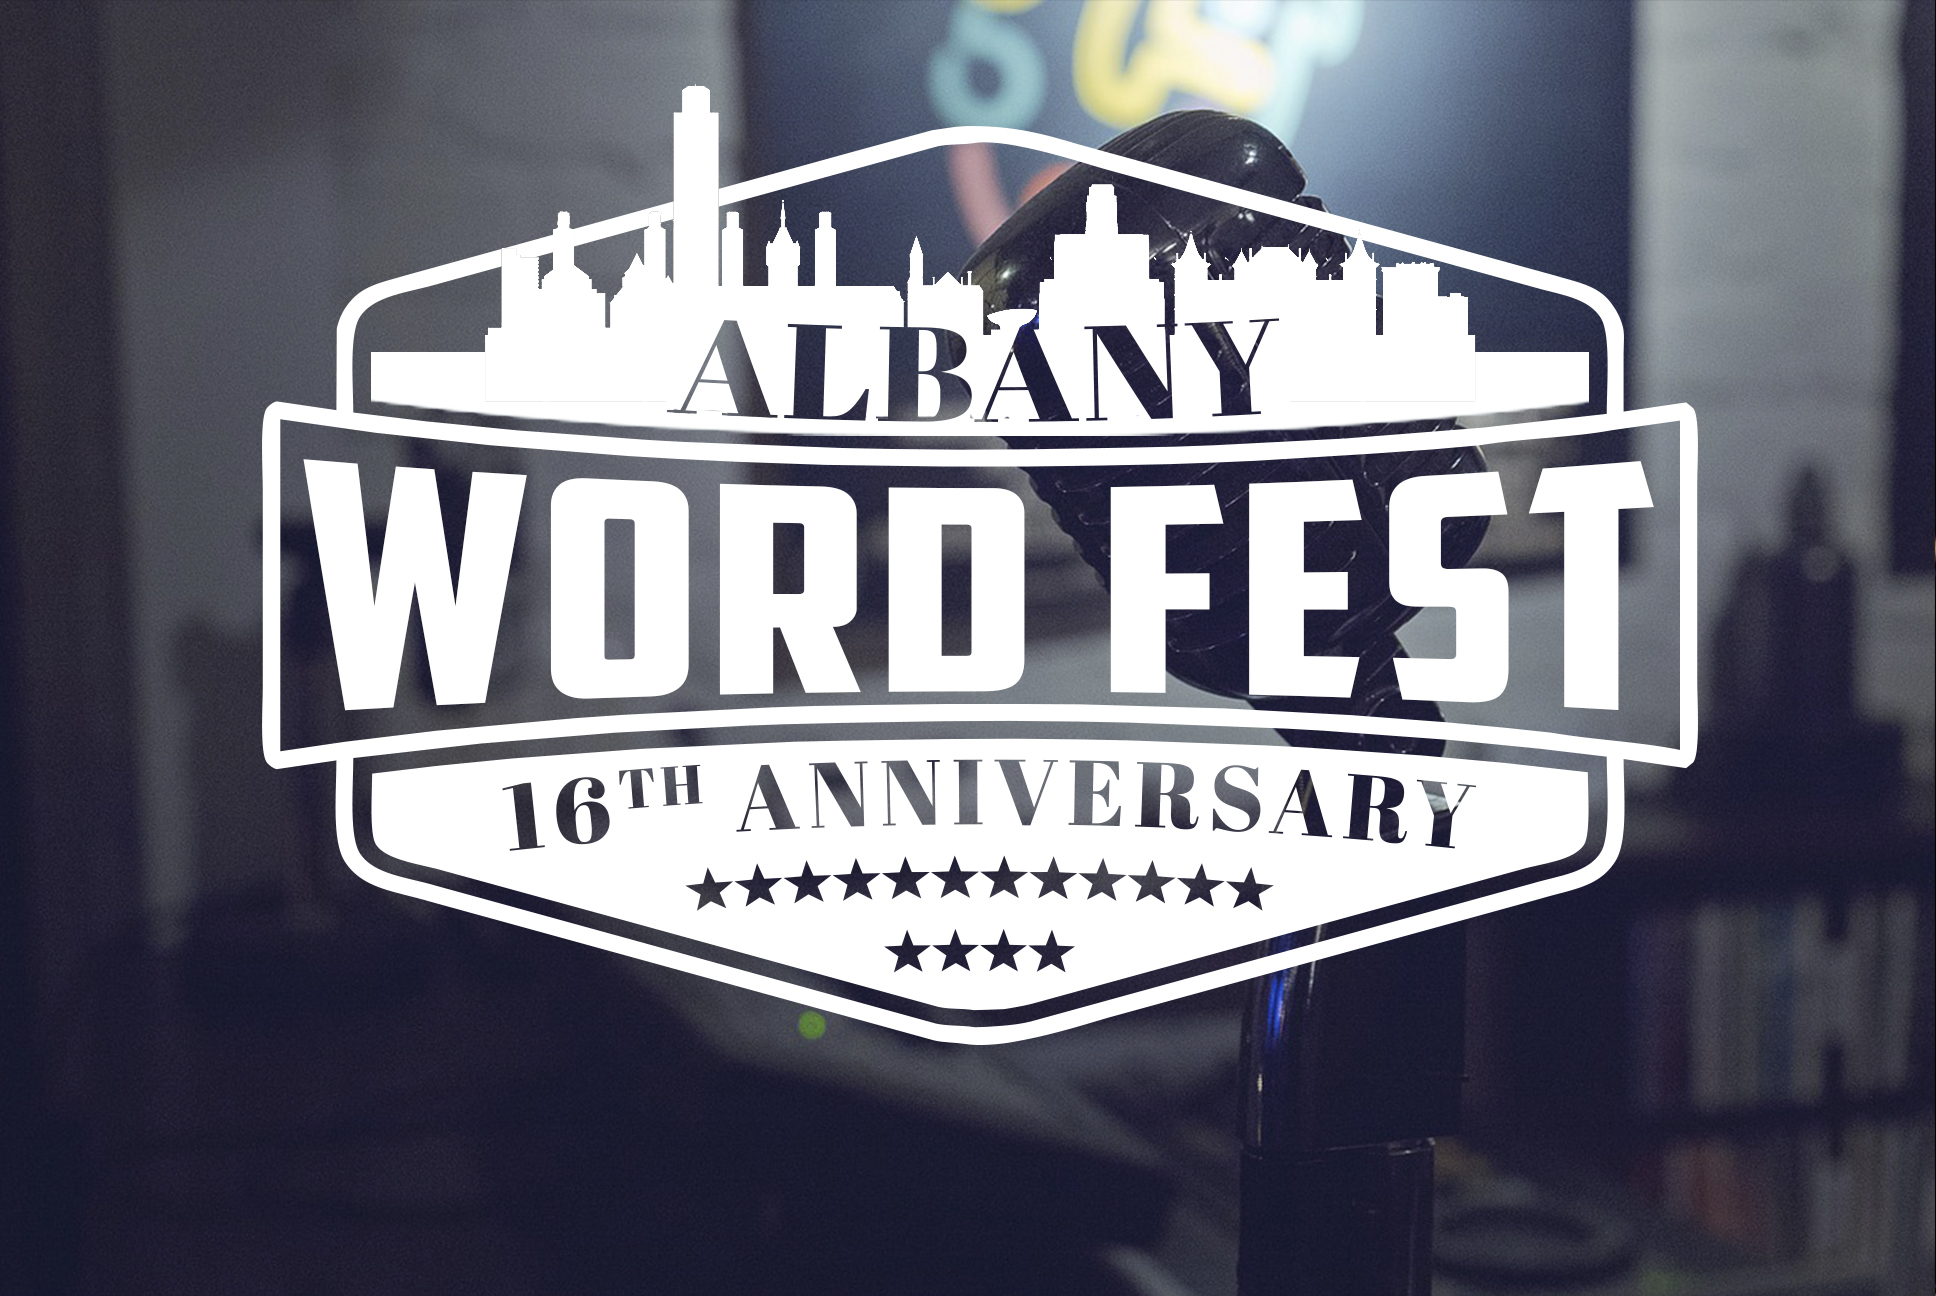 Albany Word Fest